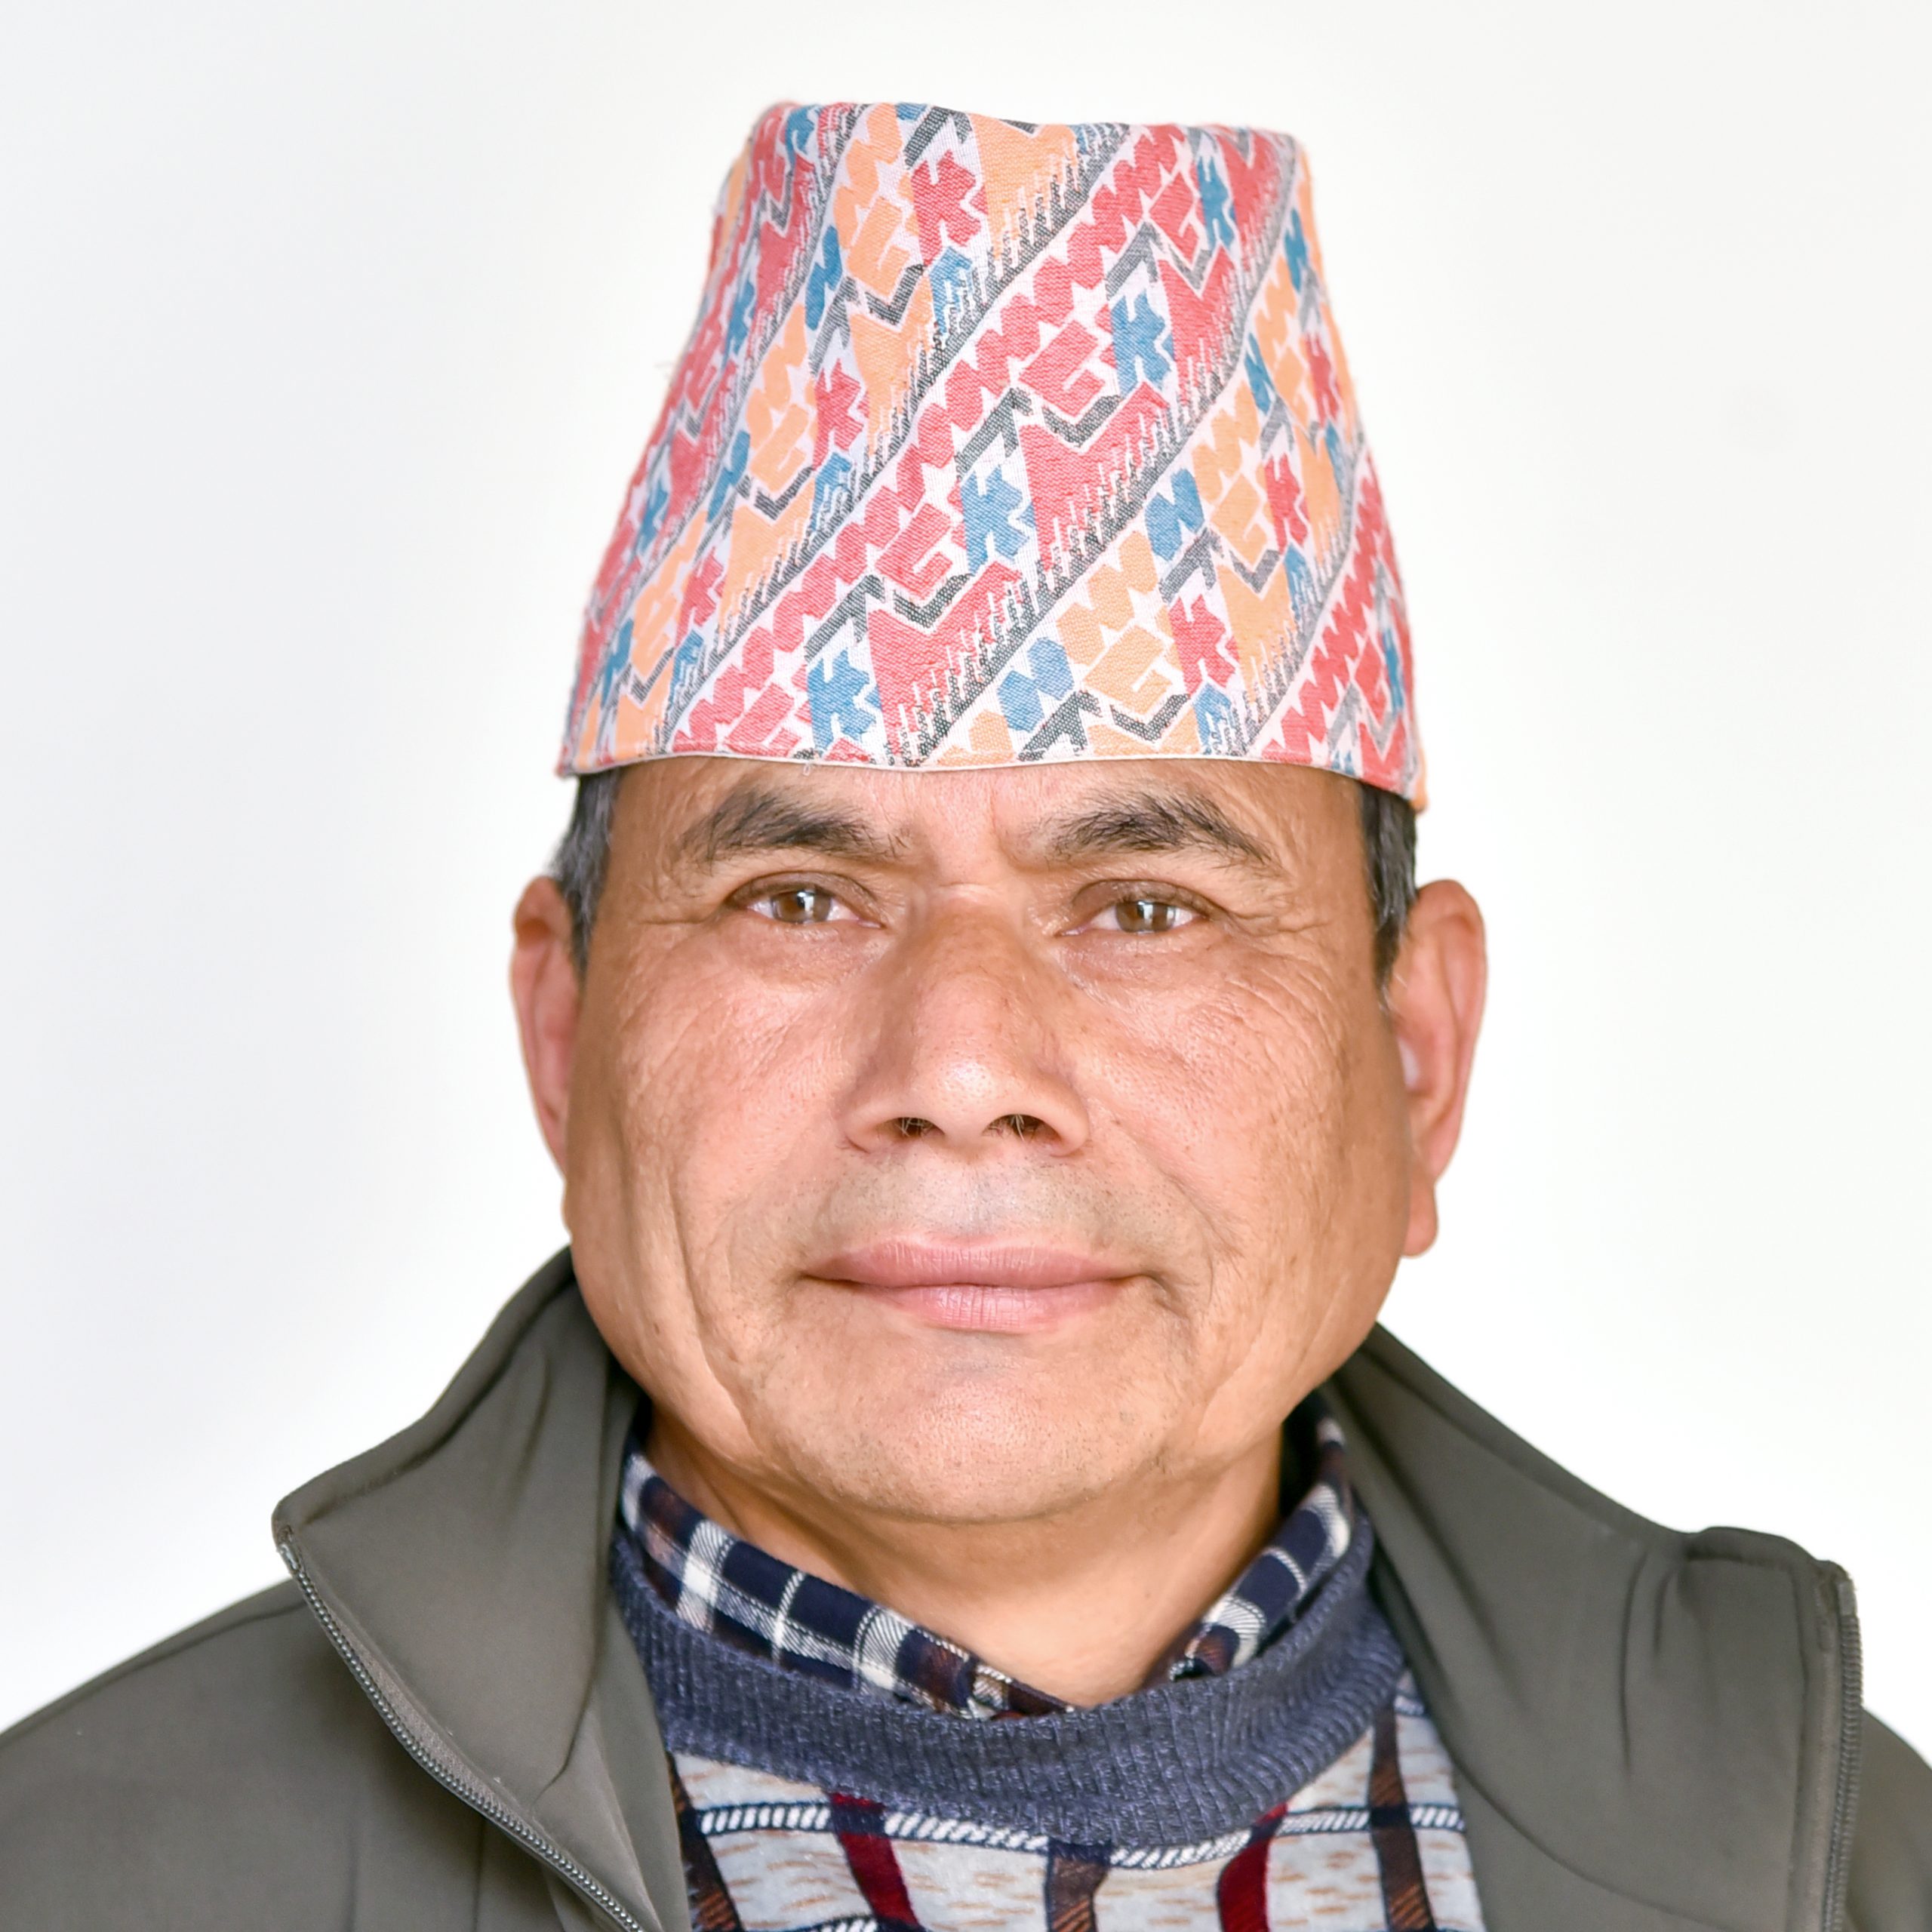 Mr. Deepak Thapa